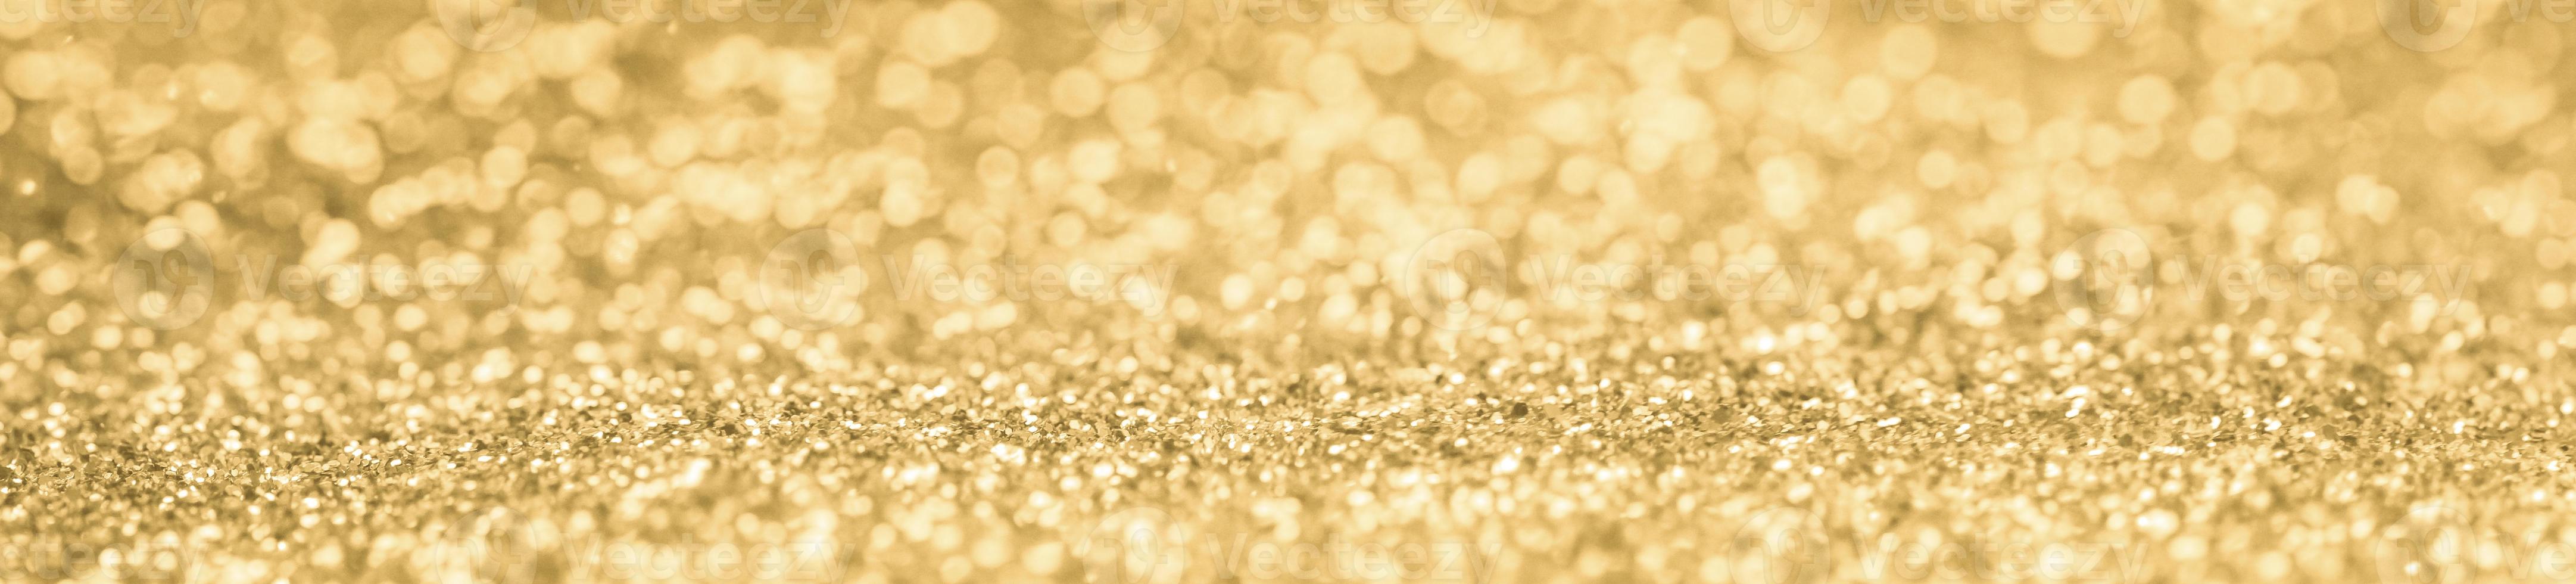 banner glitter dourado foto